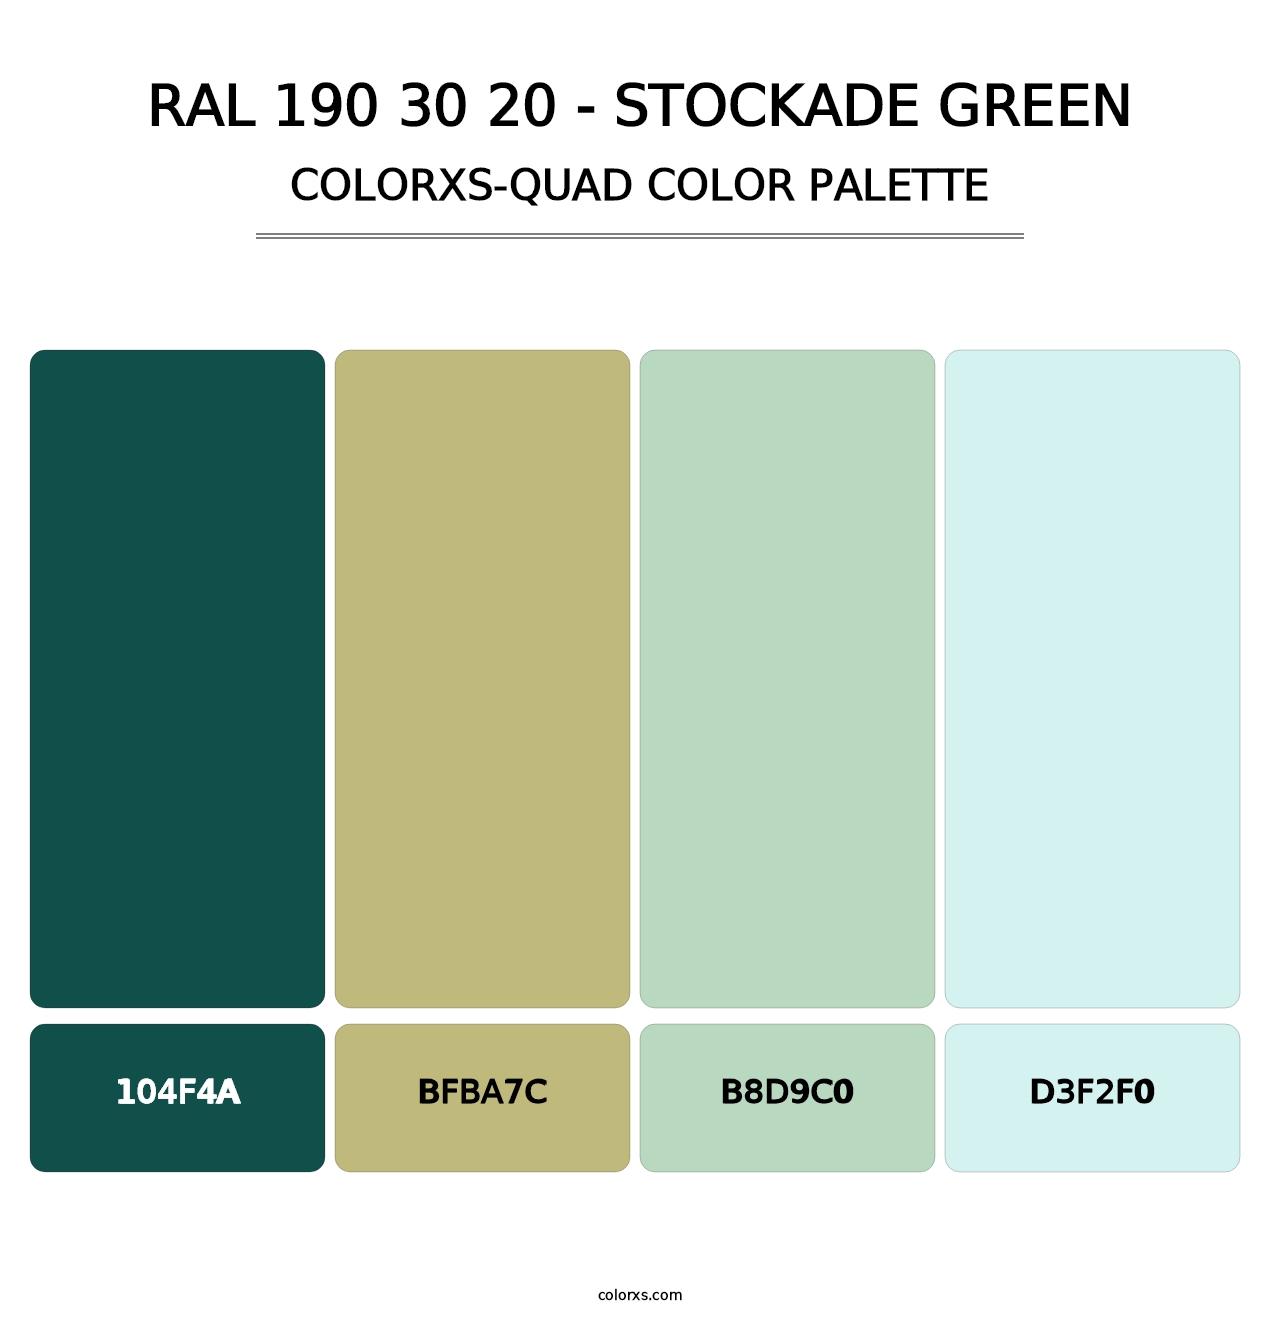 RAL 190 30 20 - Stockade Green - Colorxs Quad Palette